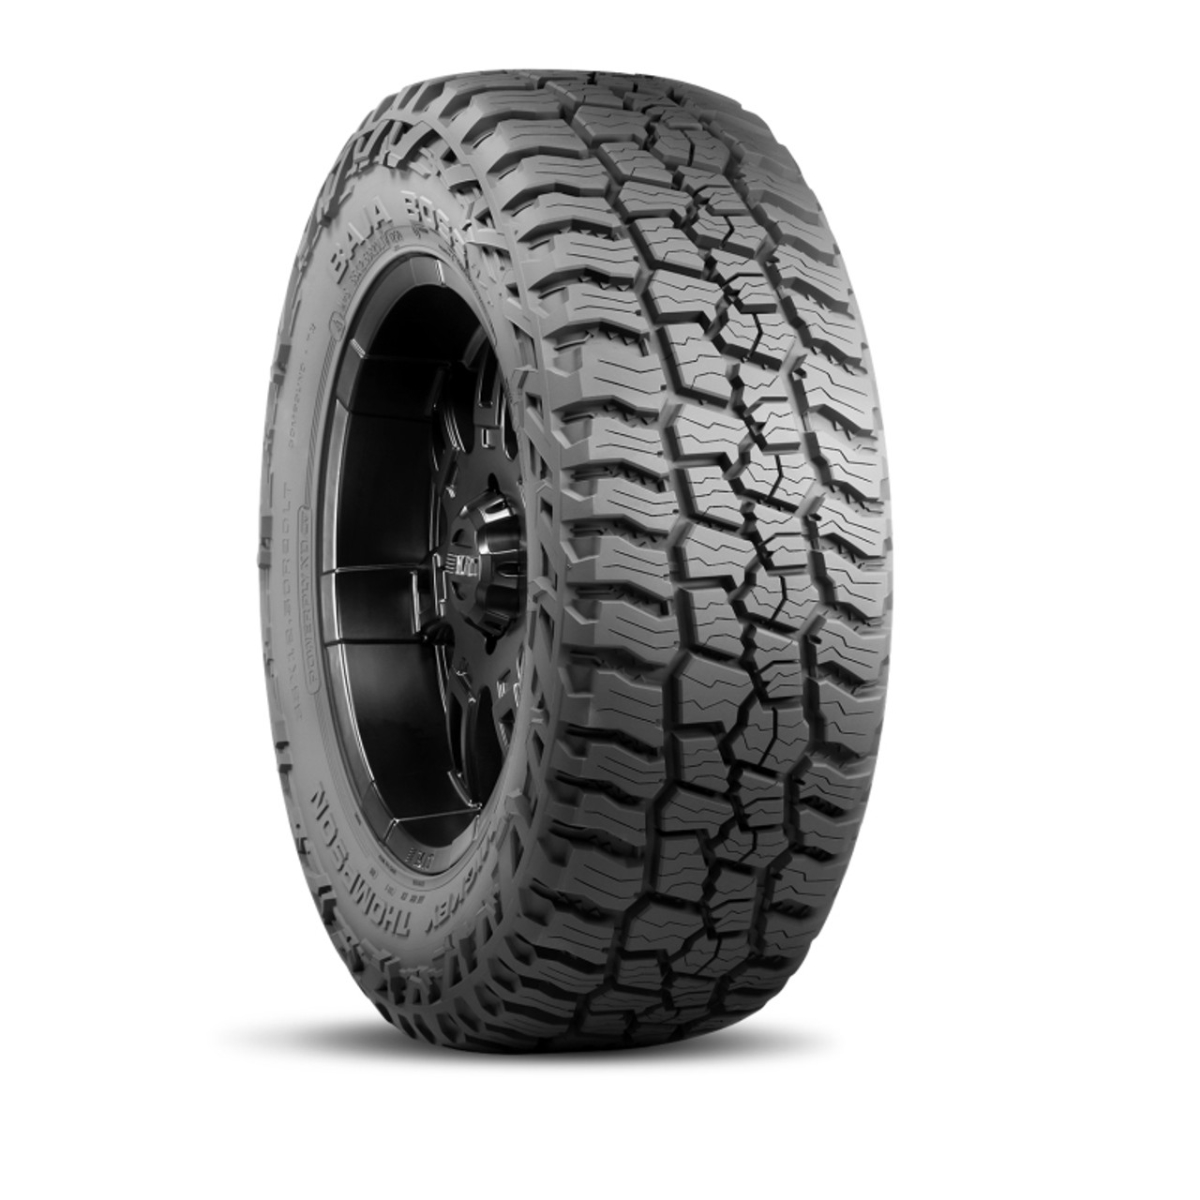 Picture of Mickey Thompson 36849 LT325-50R22 127Q Baja Boss Asymmetric Tread Tire